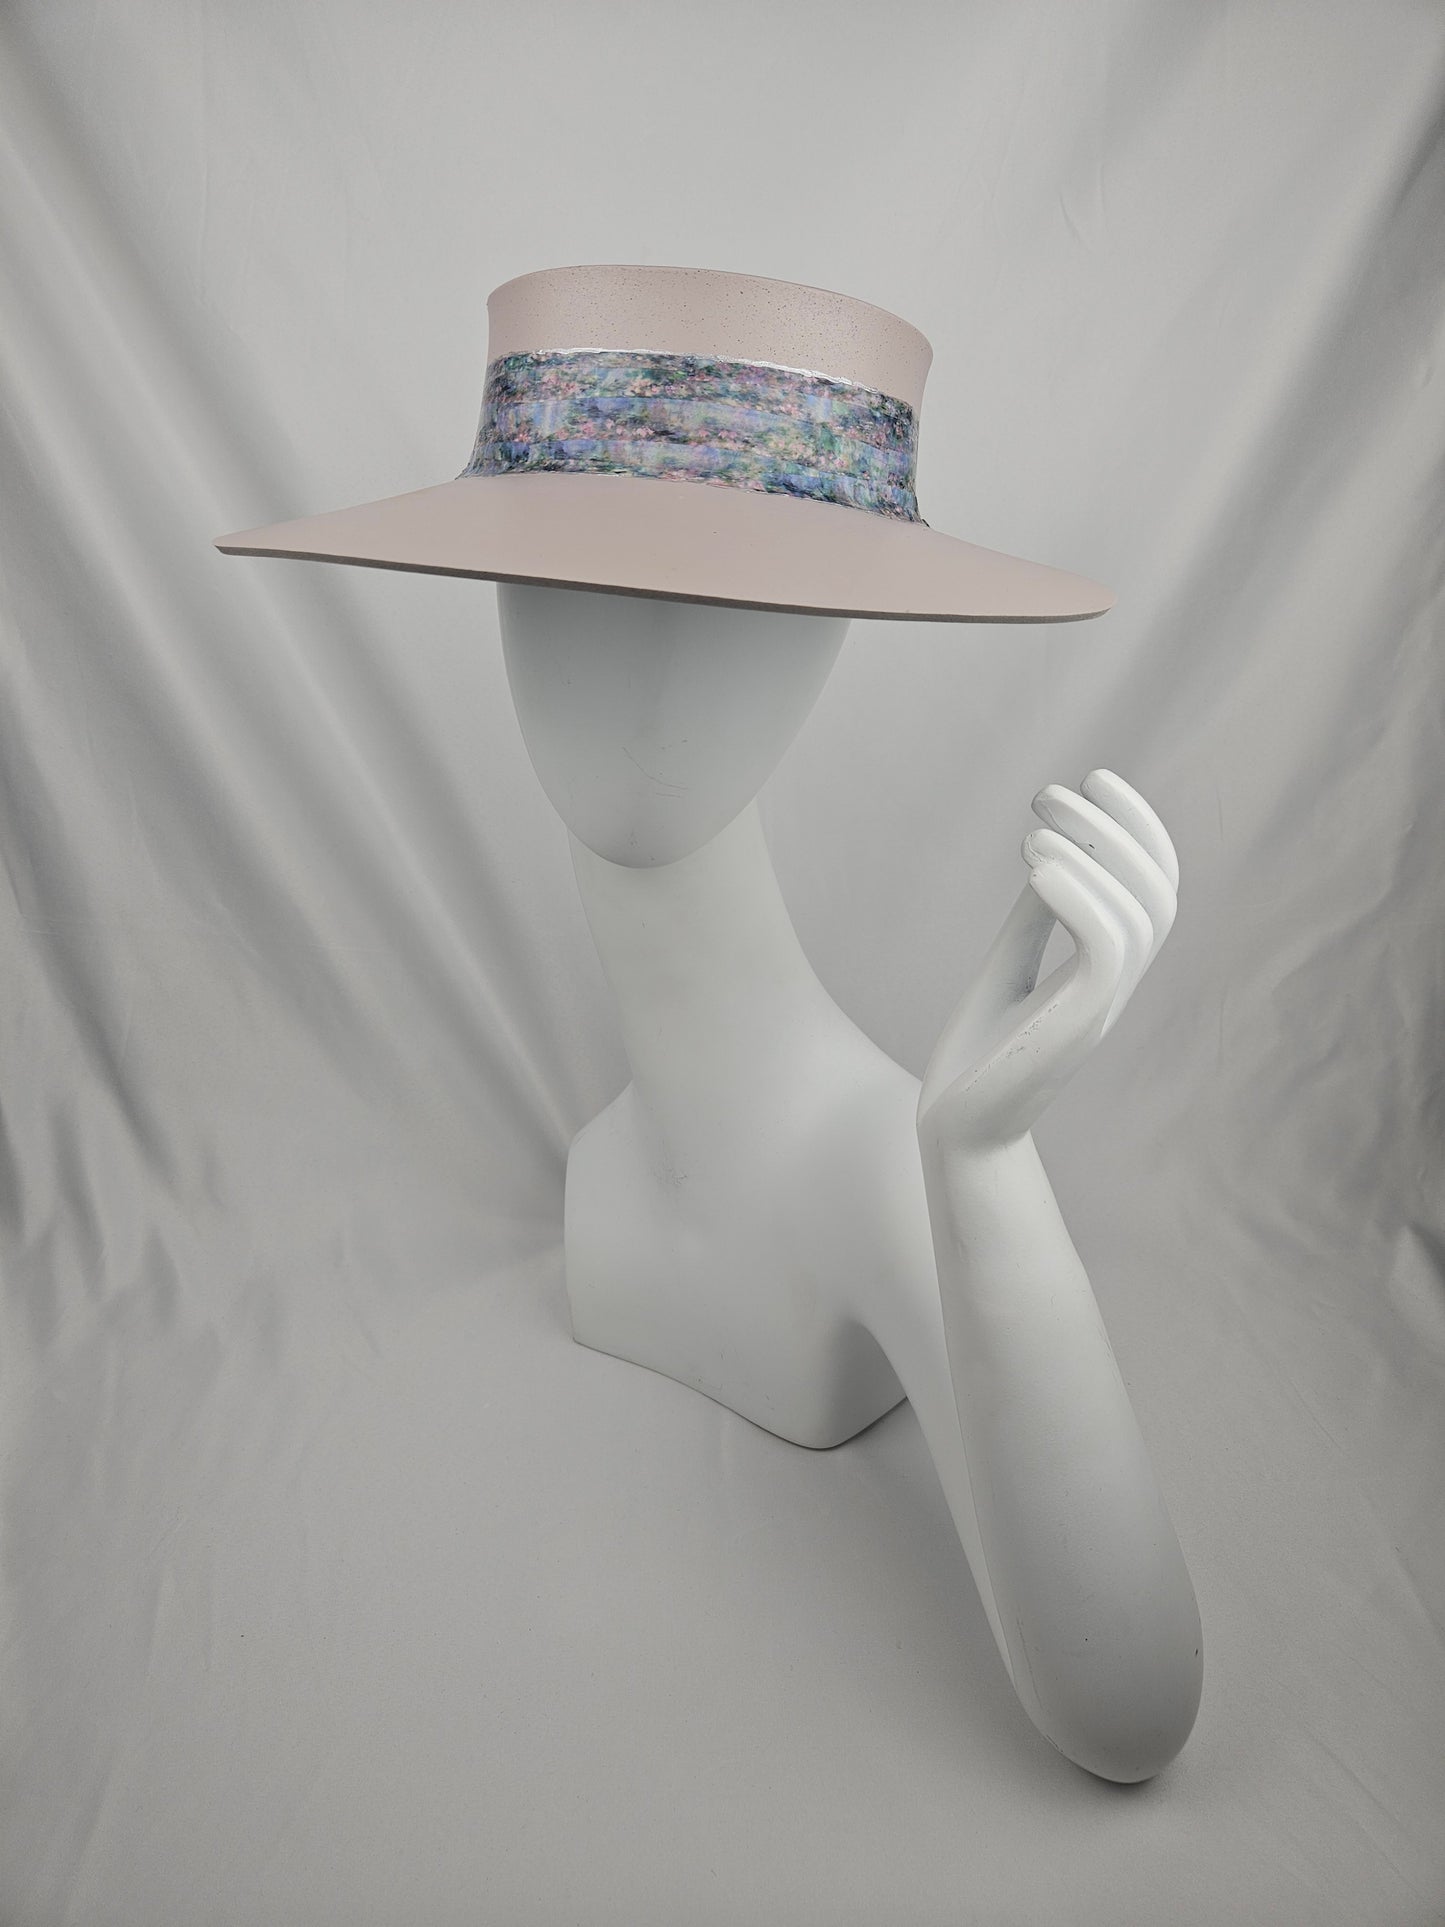 Soft Pink Audrey Foam Sun Visor Hat with Delicate Monet Style Band: 1940s, Walks, Brunch, Asian, Golf, Easter, Church, No Headache, Derby